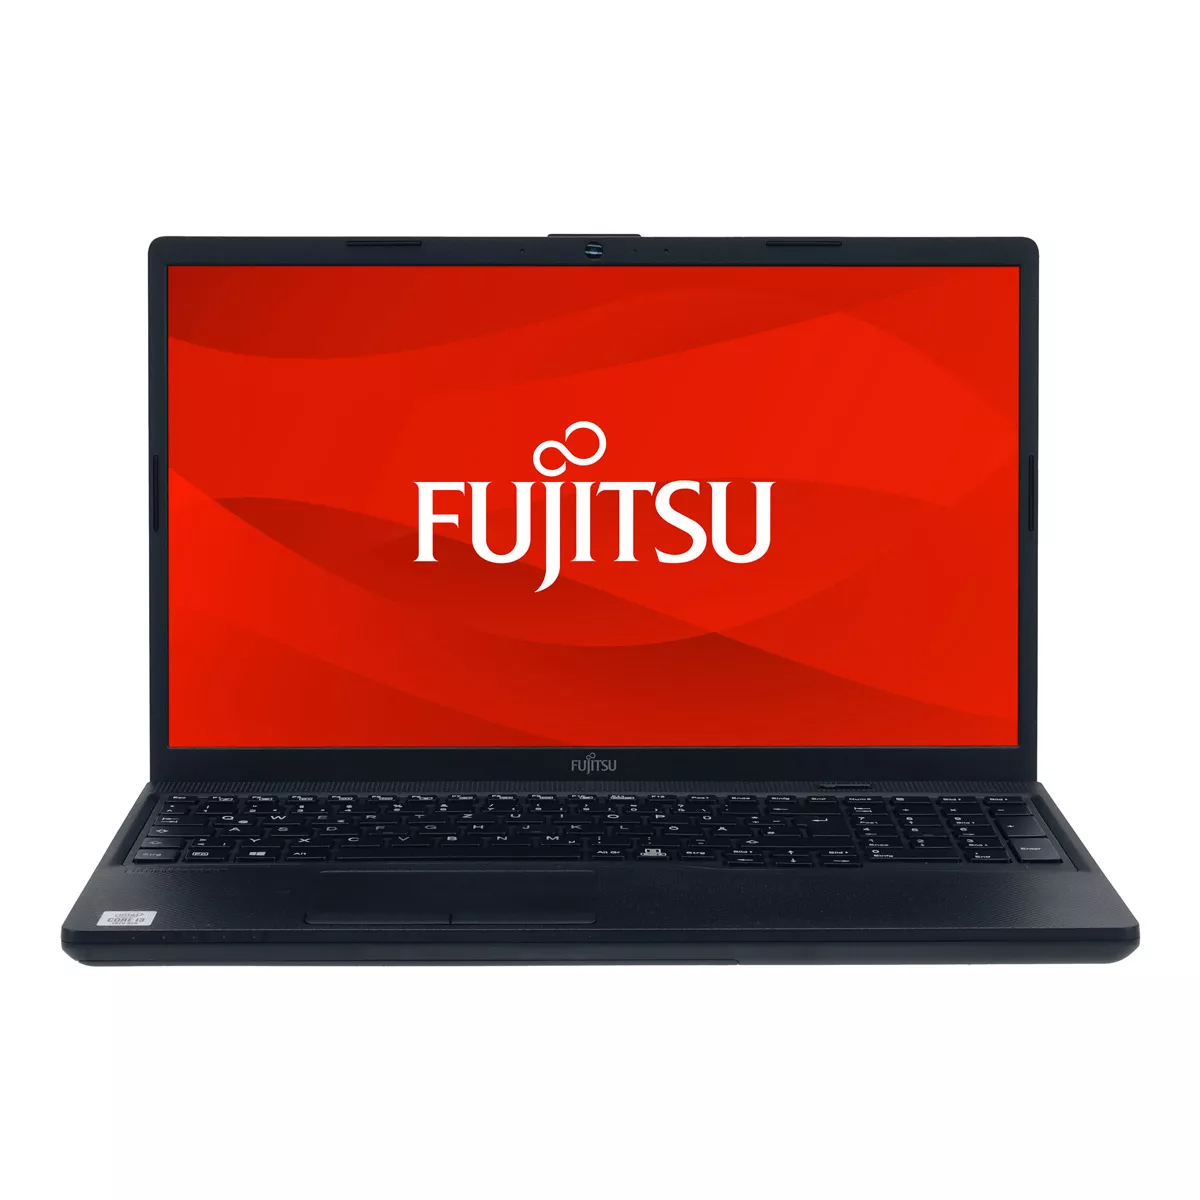 Fujitsu Lifebook A3510 Core i5 1035G1 Full HD 8 GB 240 GB M.2 nVME SSD Webcam A